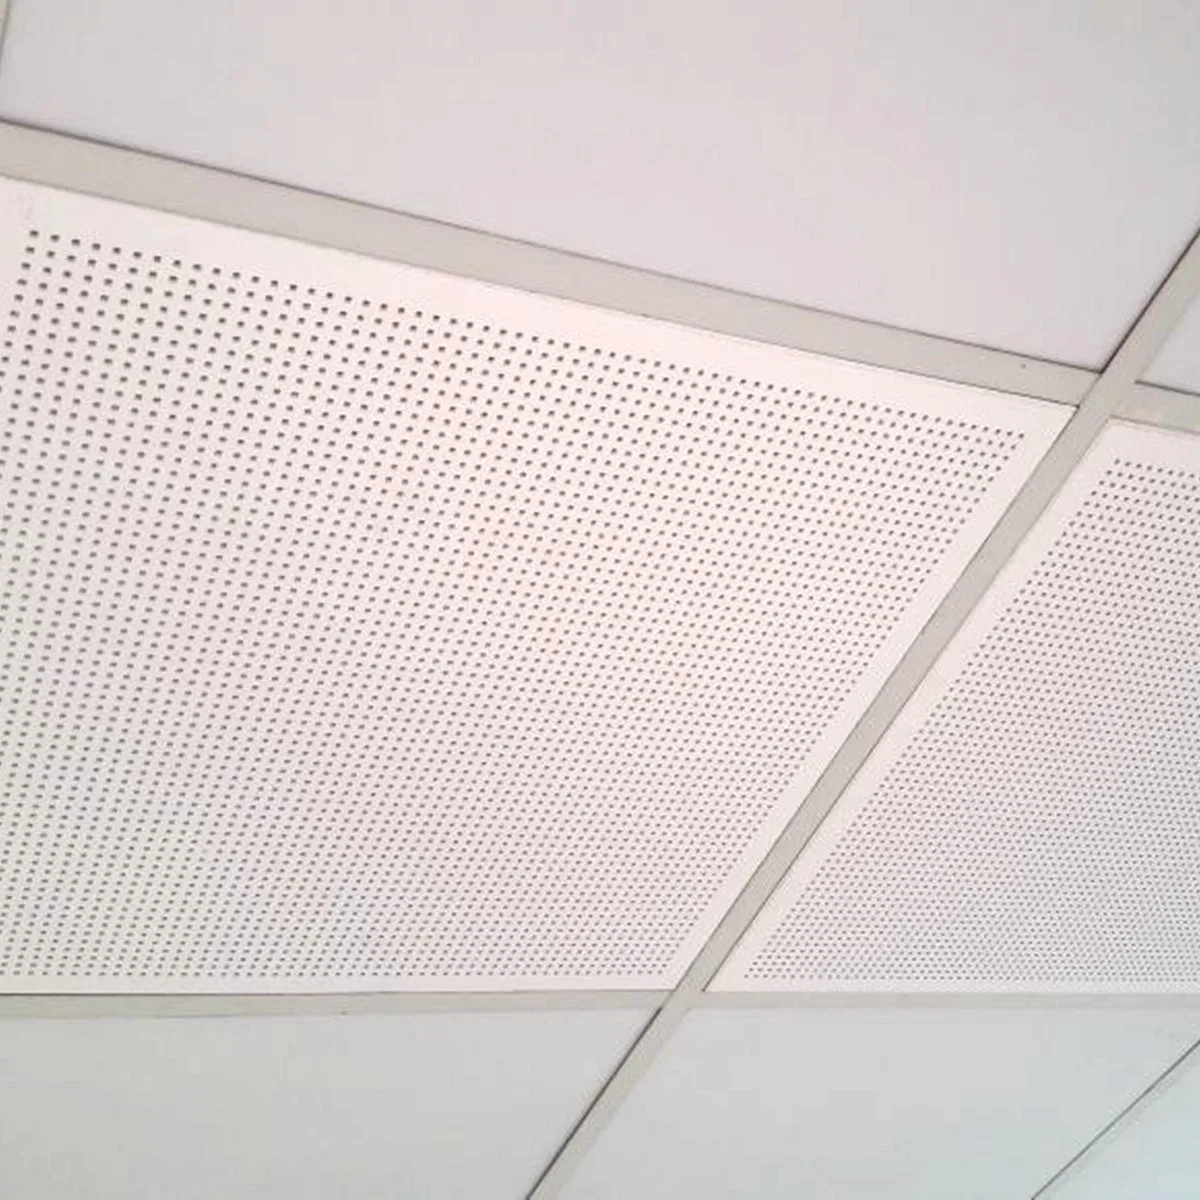 Paneles acústicos de techo de yeso perforados que absorben el sonido